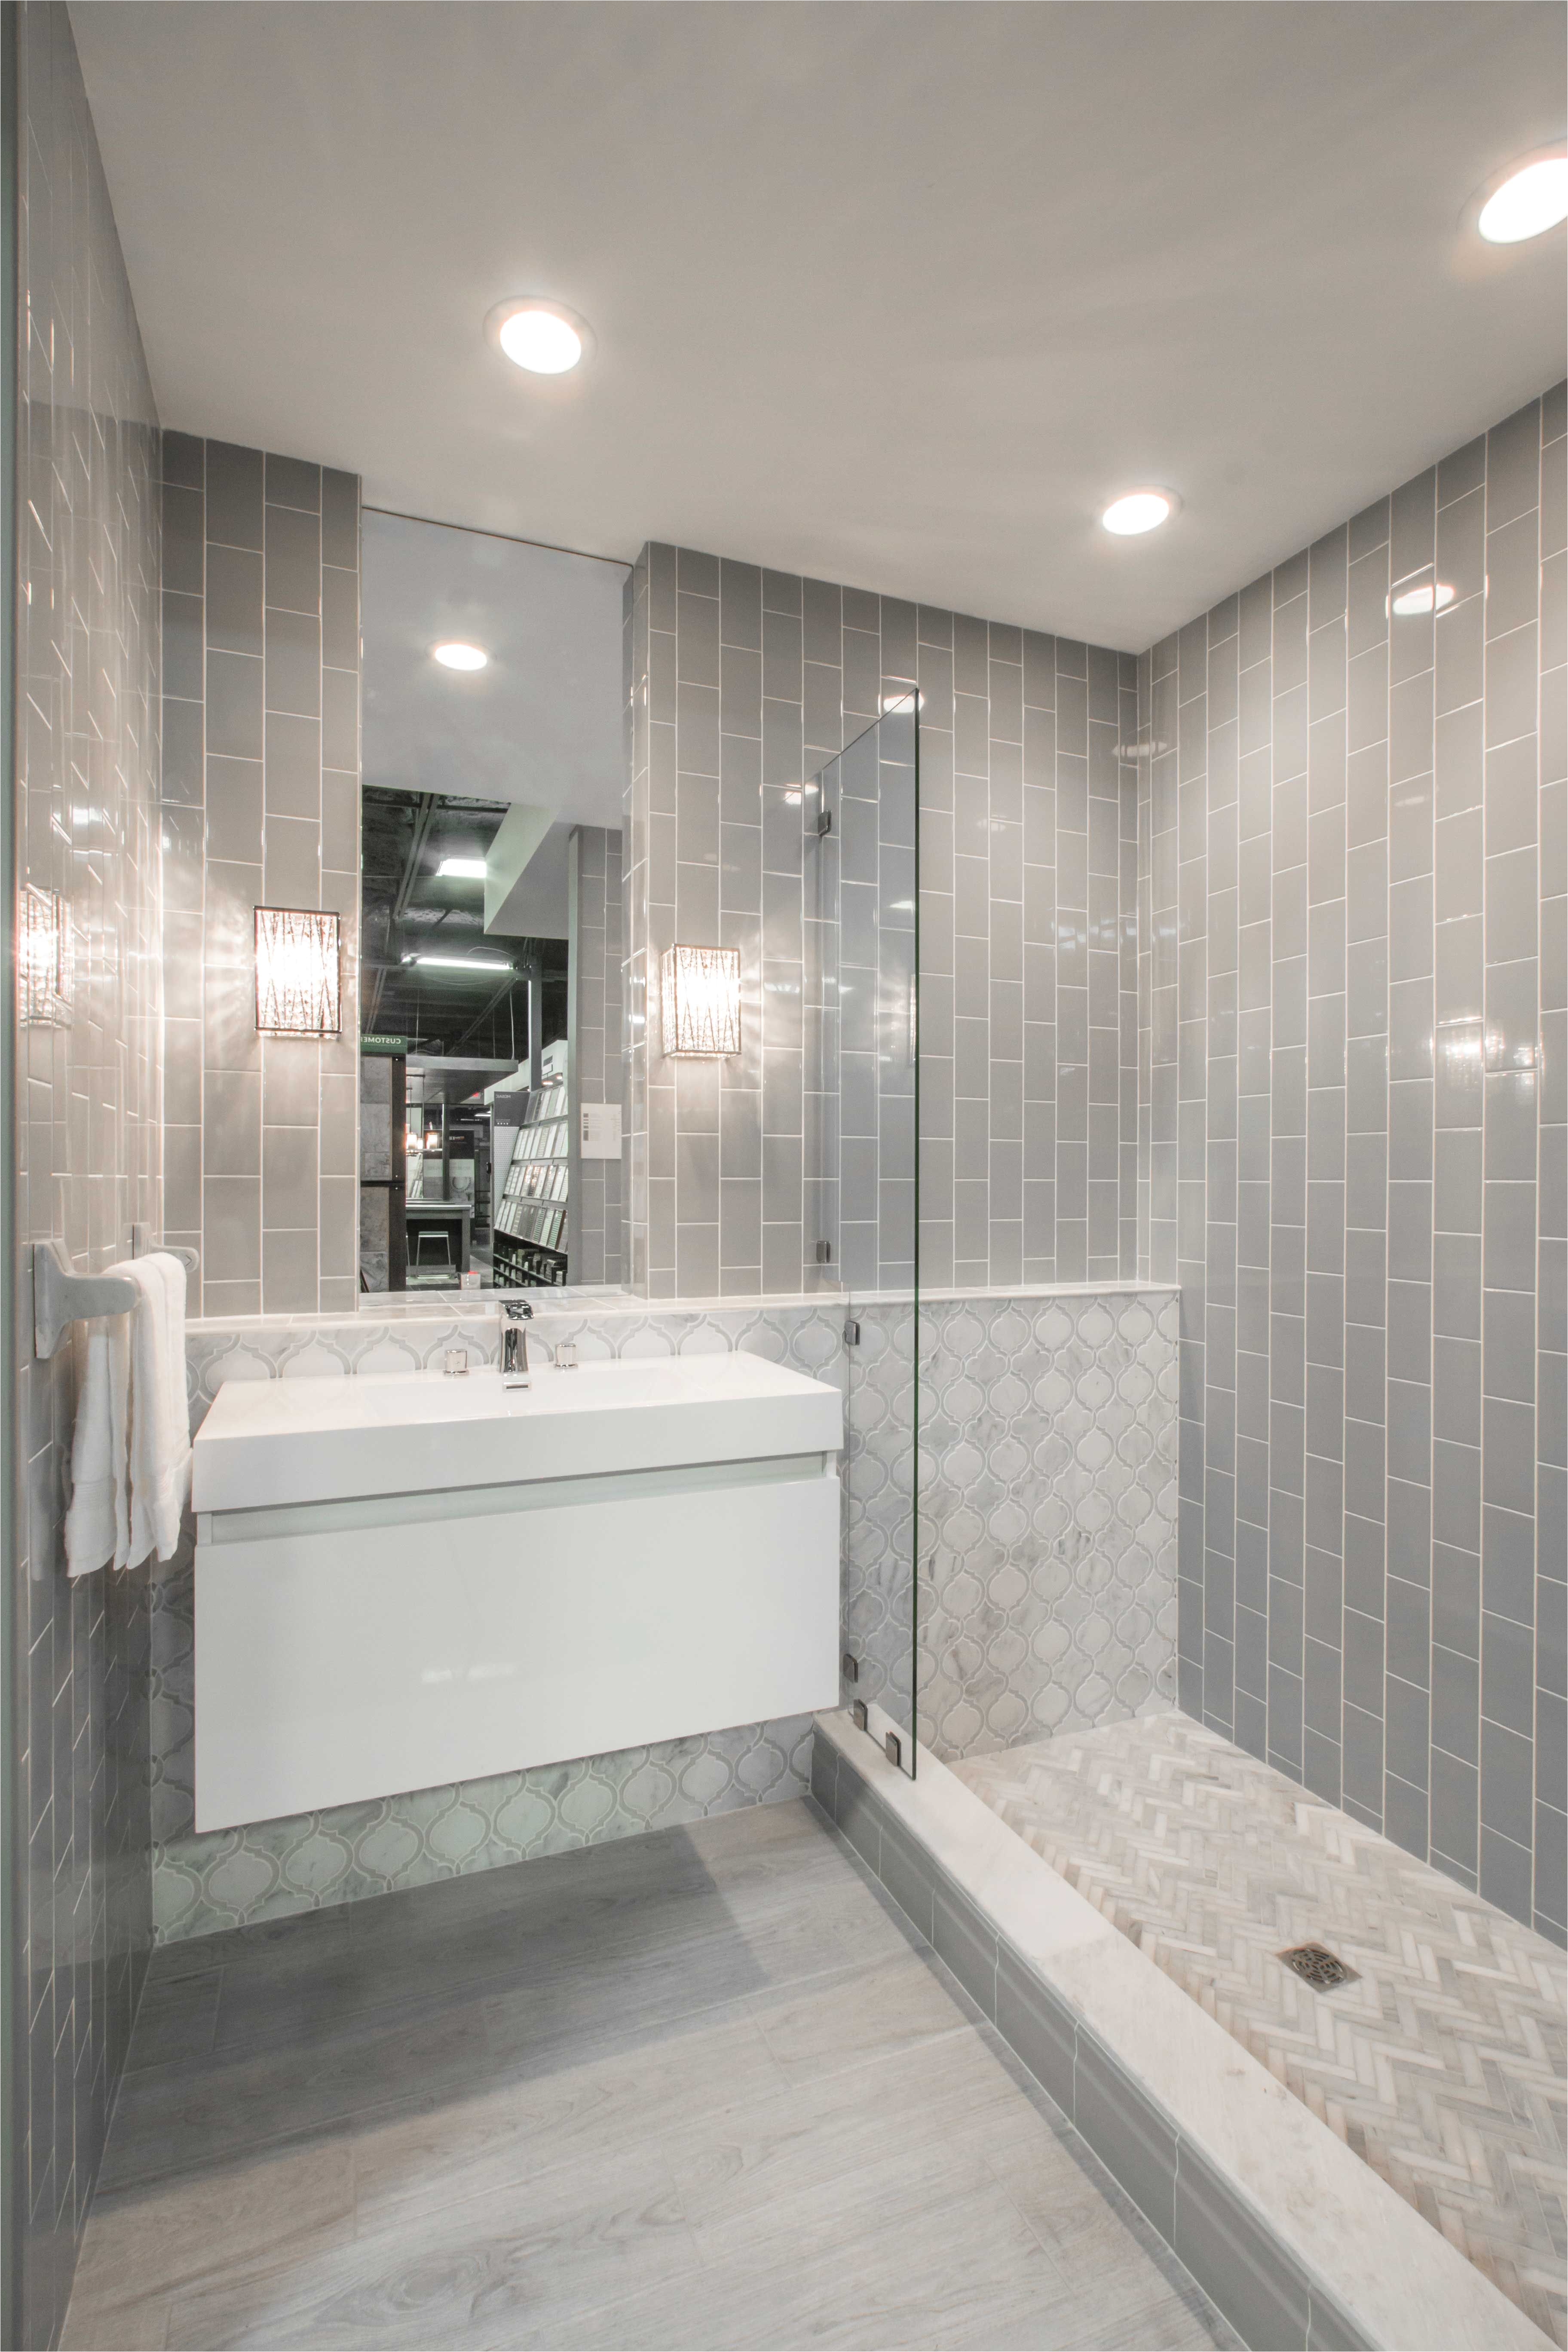 Simple yet elegant bathroom wall tile Imperial Ice Grey Gloss Ceramic Subway Tile s